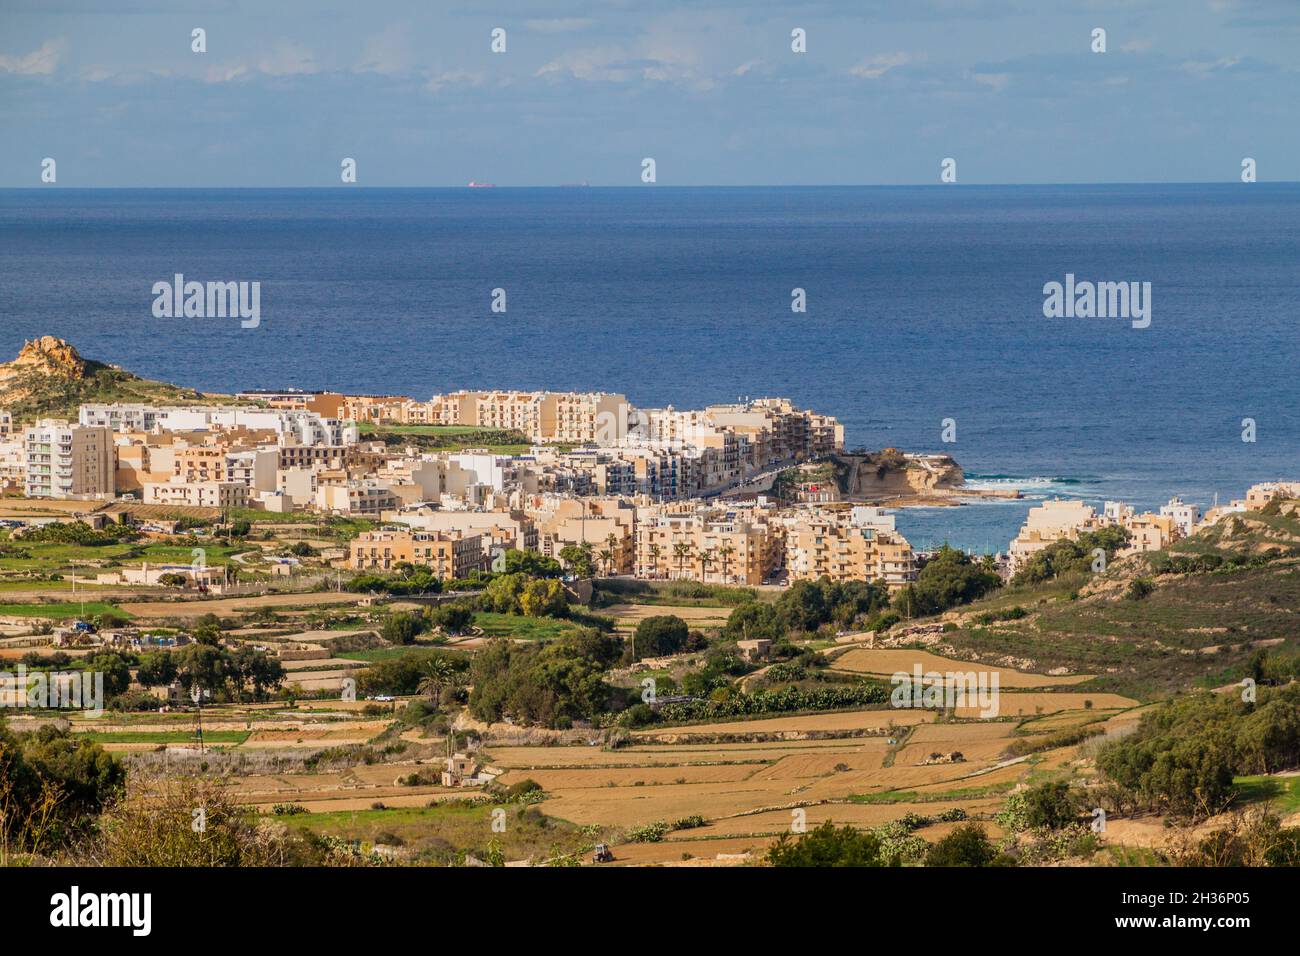 Aerial view of Marsalforn on Gozo island, Malta Stock Photo